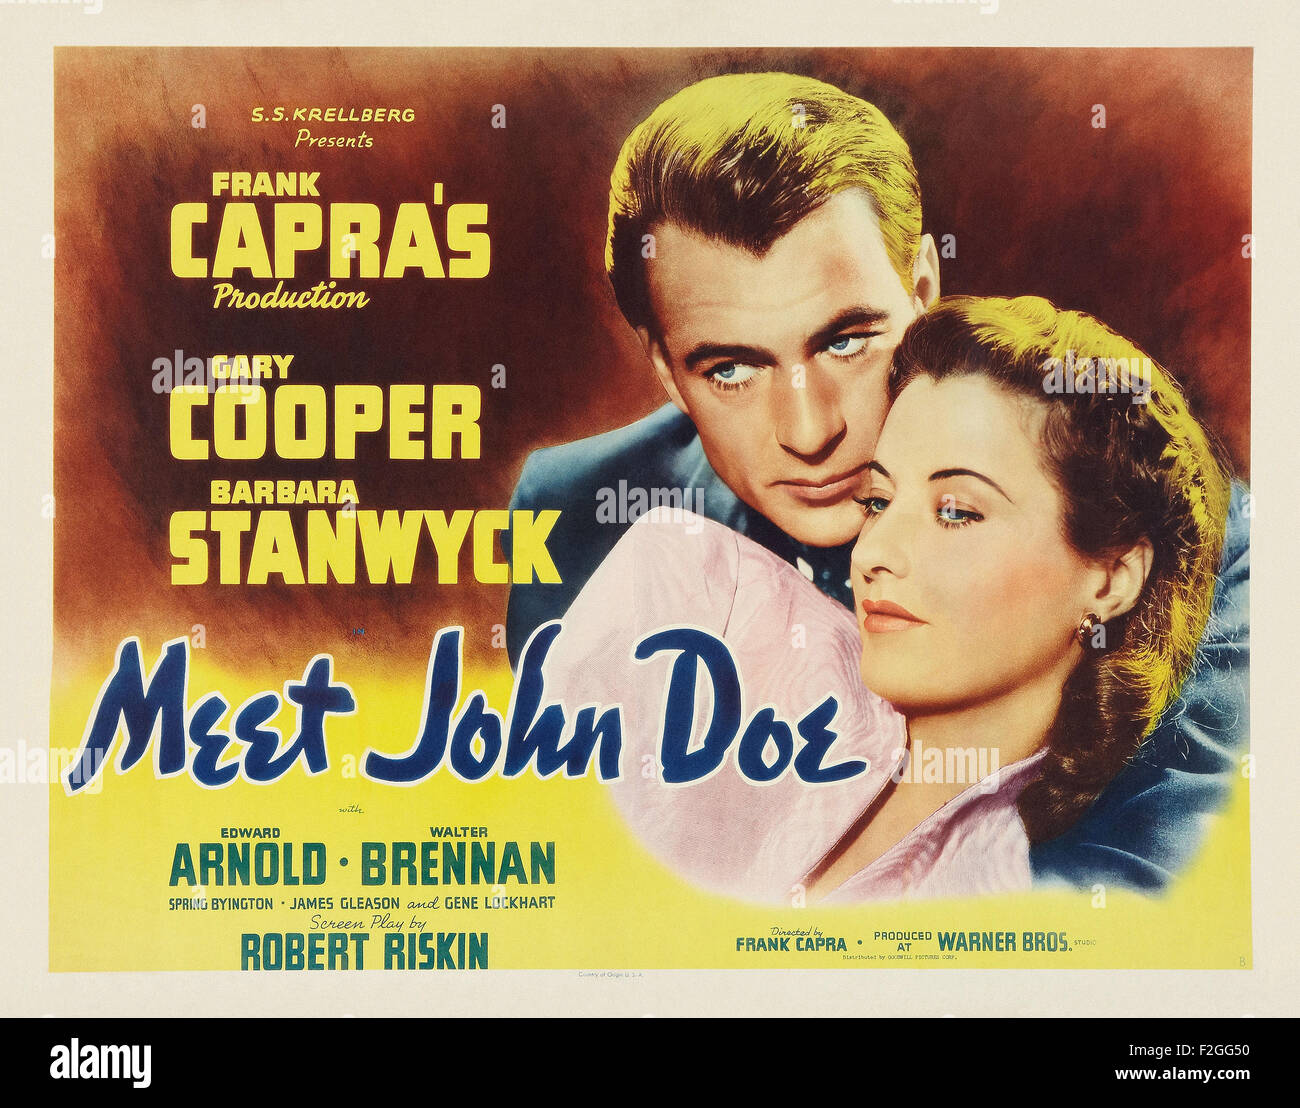 Meet John Doe 08 - Movie Poster Stock Photo